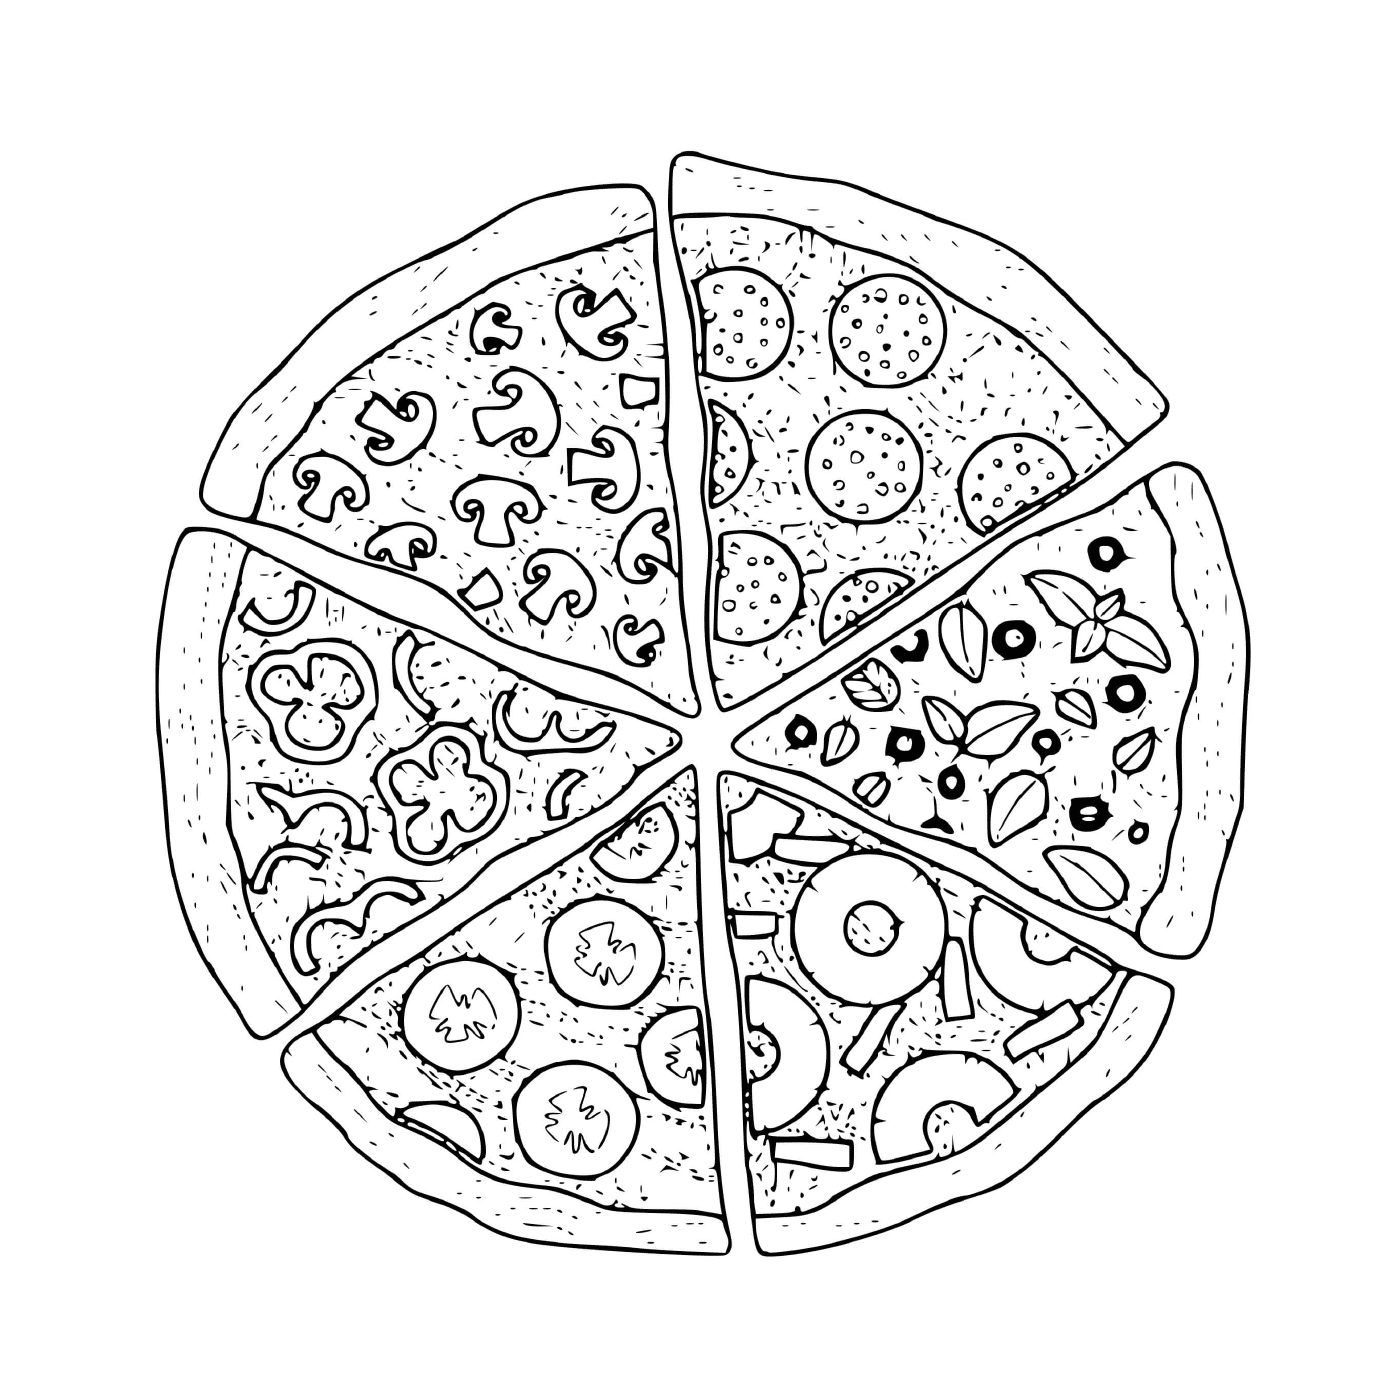  Vários cortes de pizza 